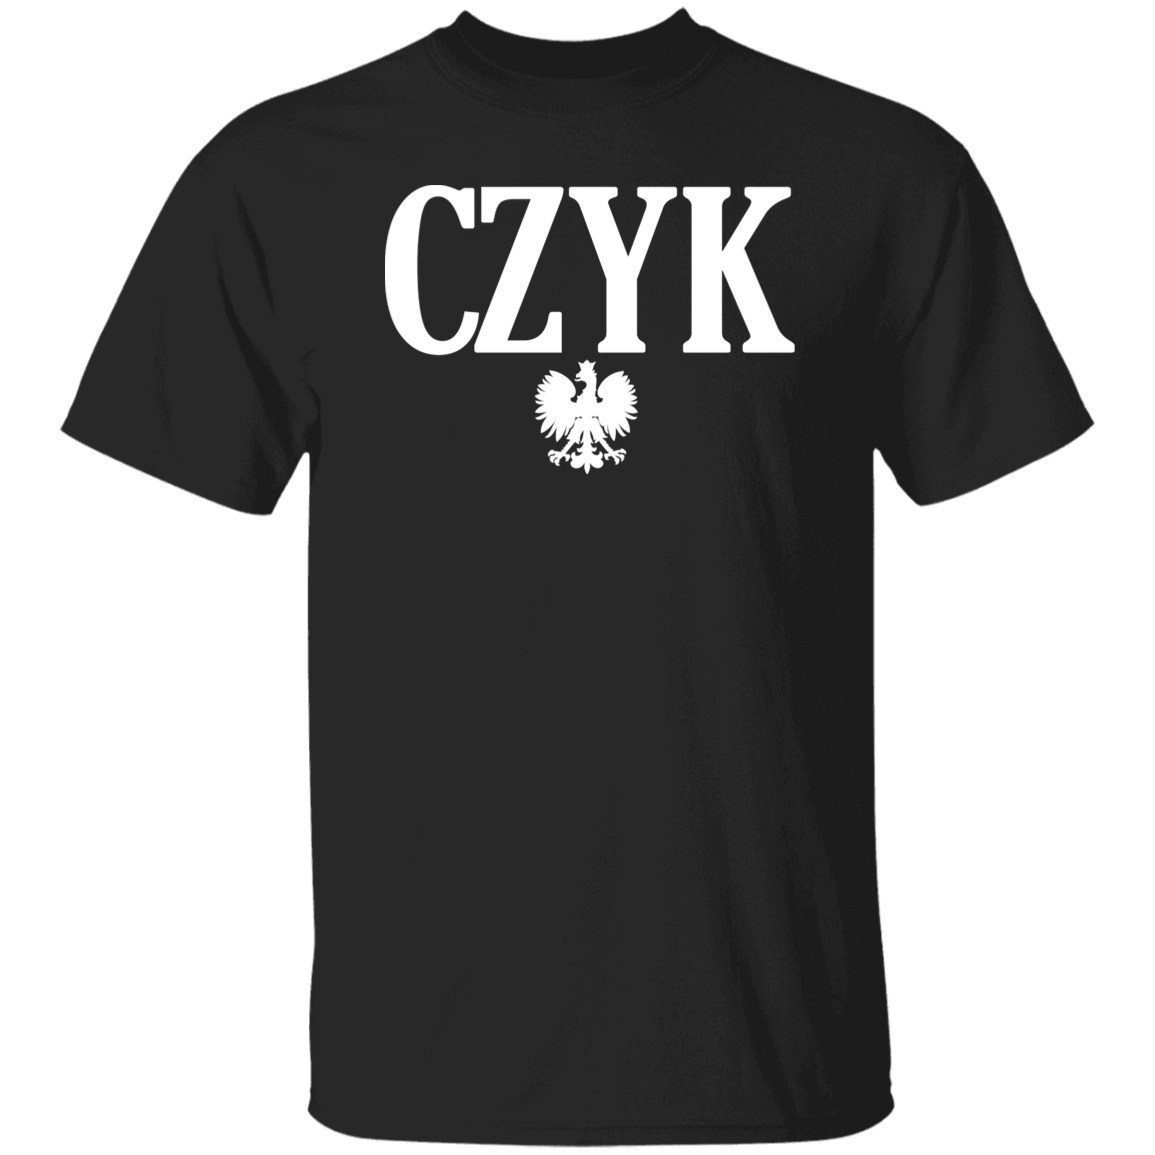 CZYK Polish Surname Ending Apparel CustomCat G500 5.3 oz. T-Shirt Black S